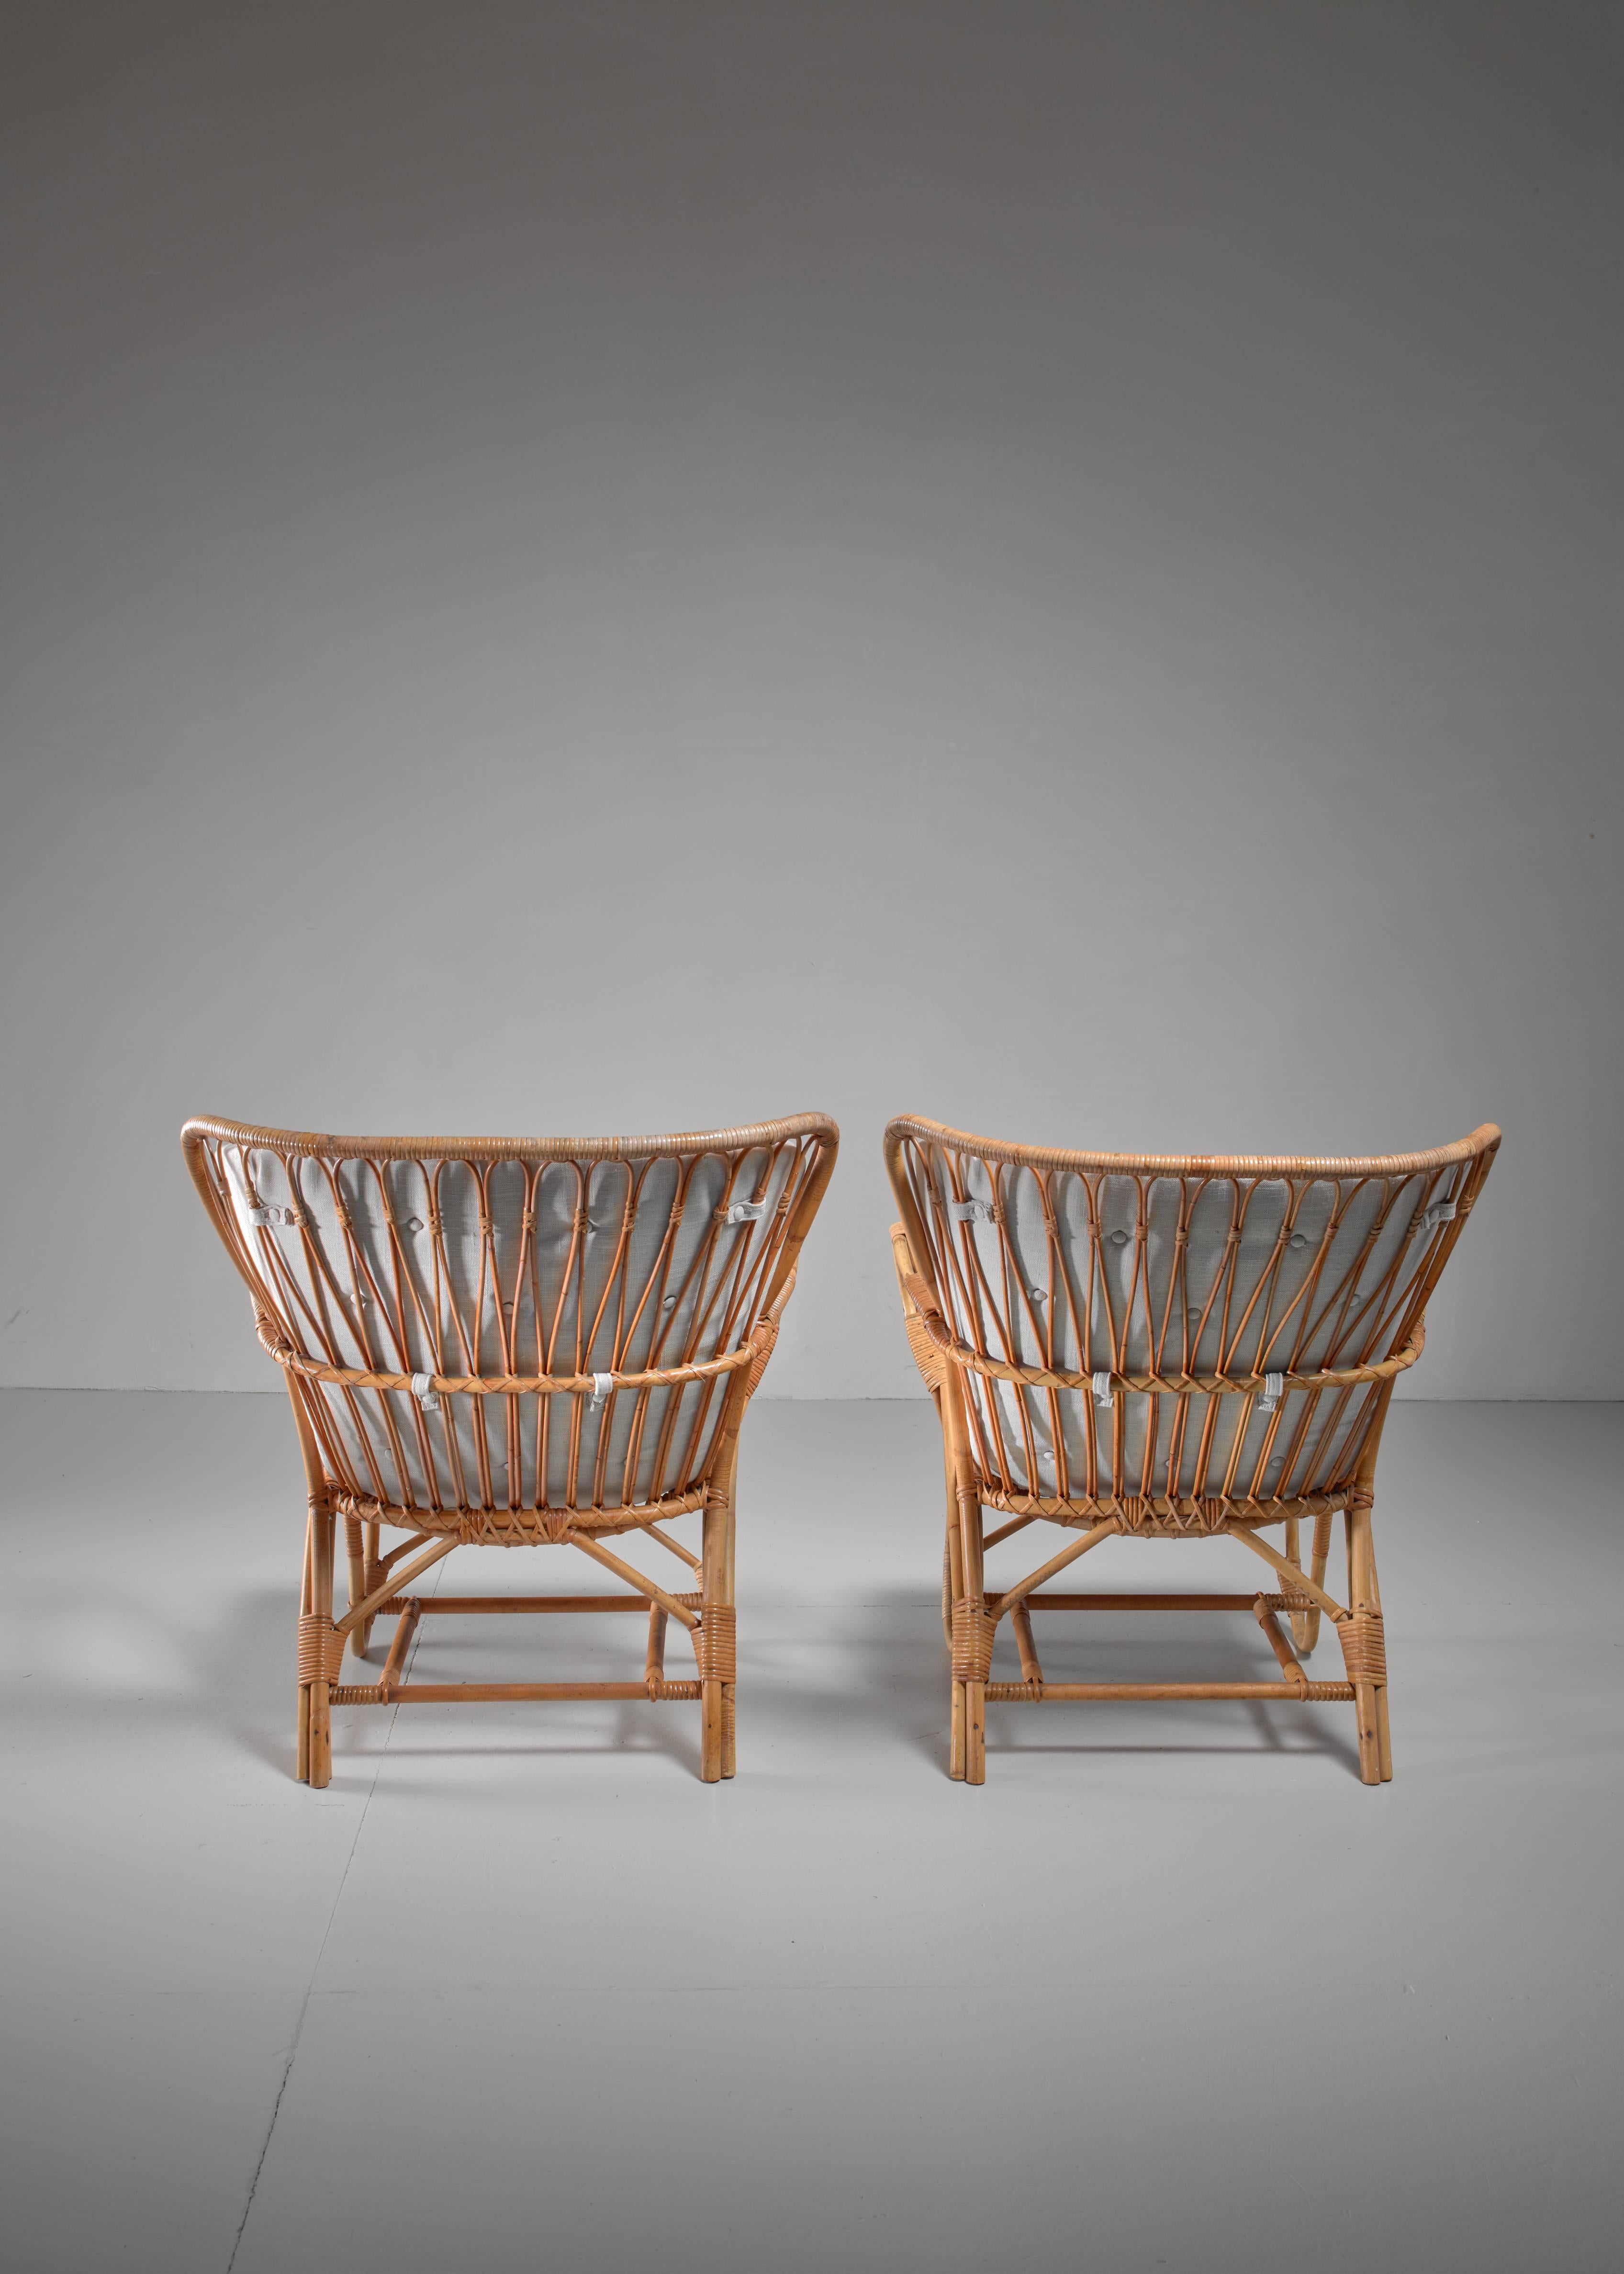 Finnish Reijo Reijonen Bamboo Garden Chairs, Finland, 1940s